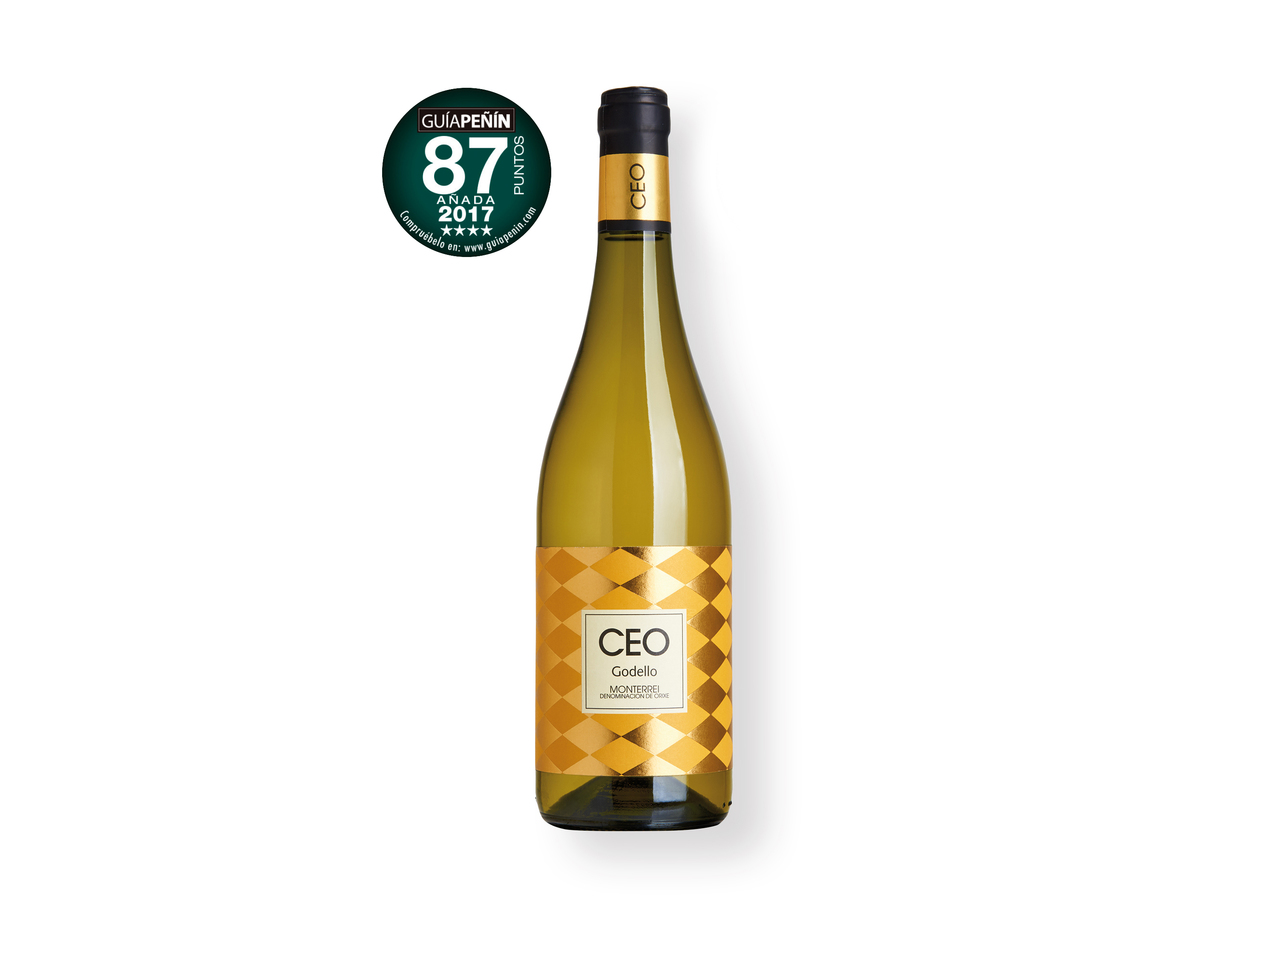 "CEO Godello" Vino blanco